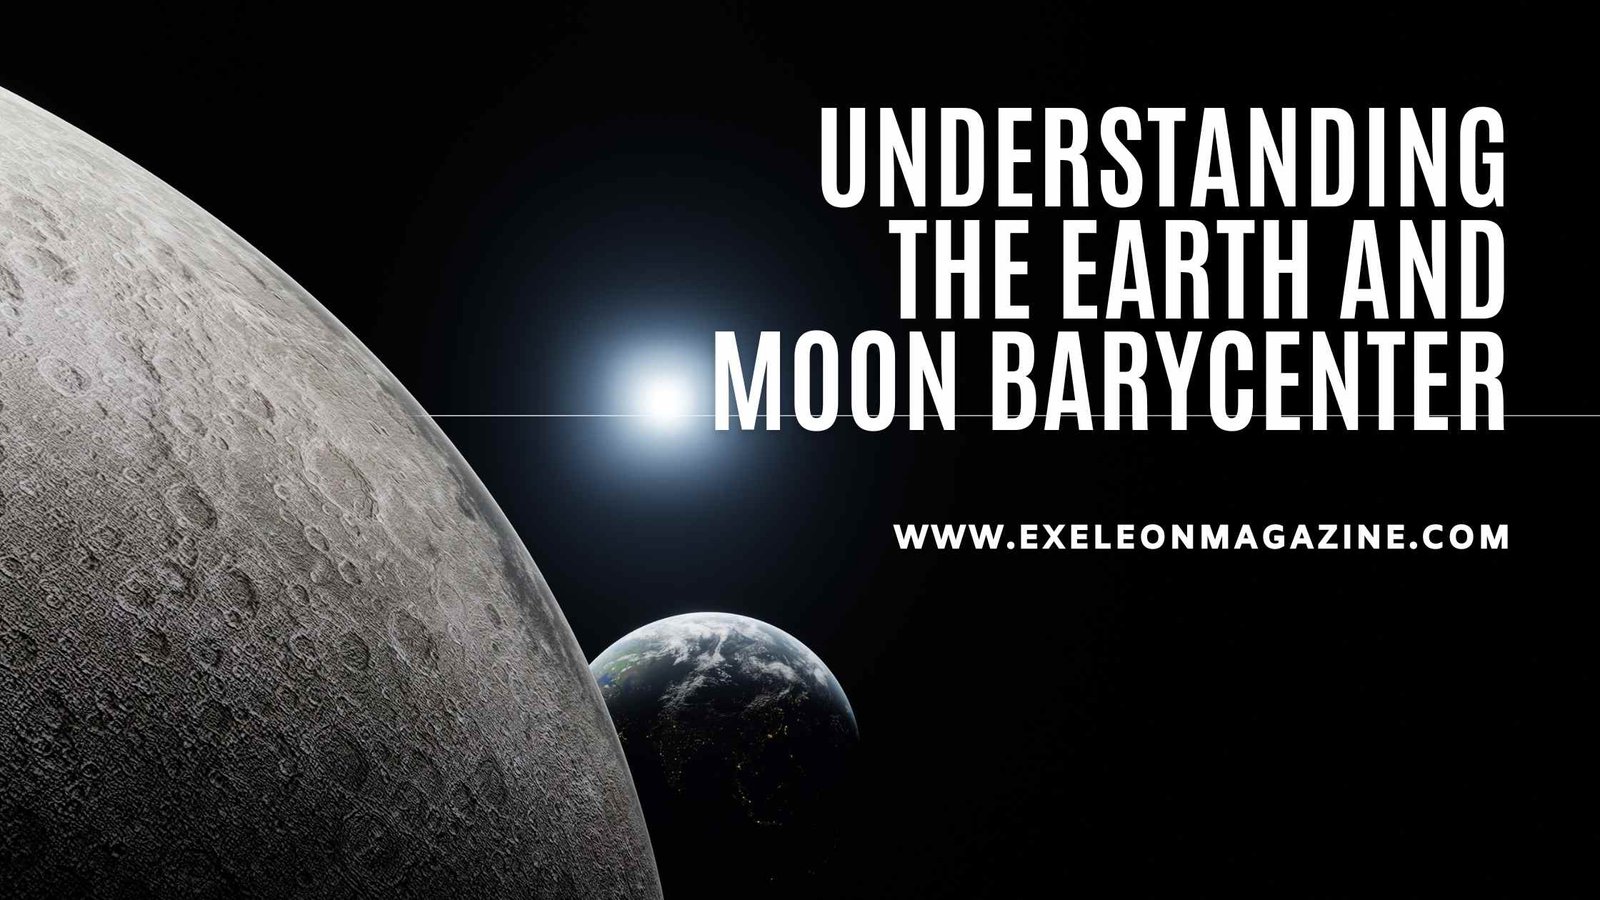 Earth and Moon Barycenter